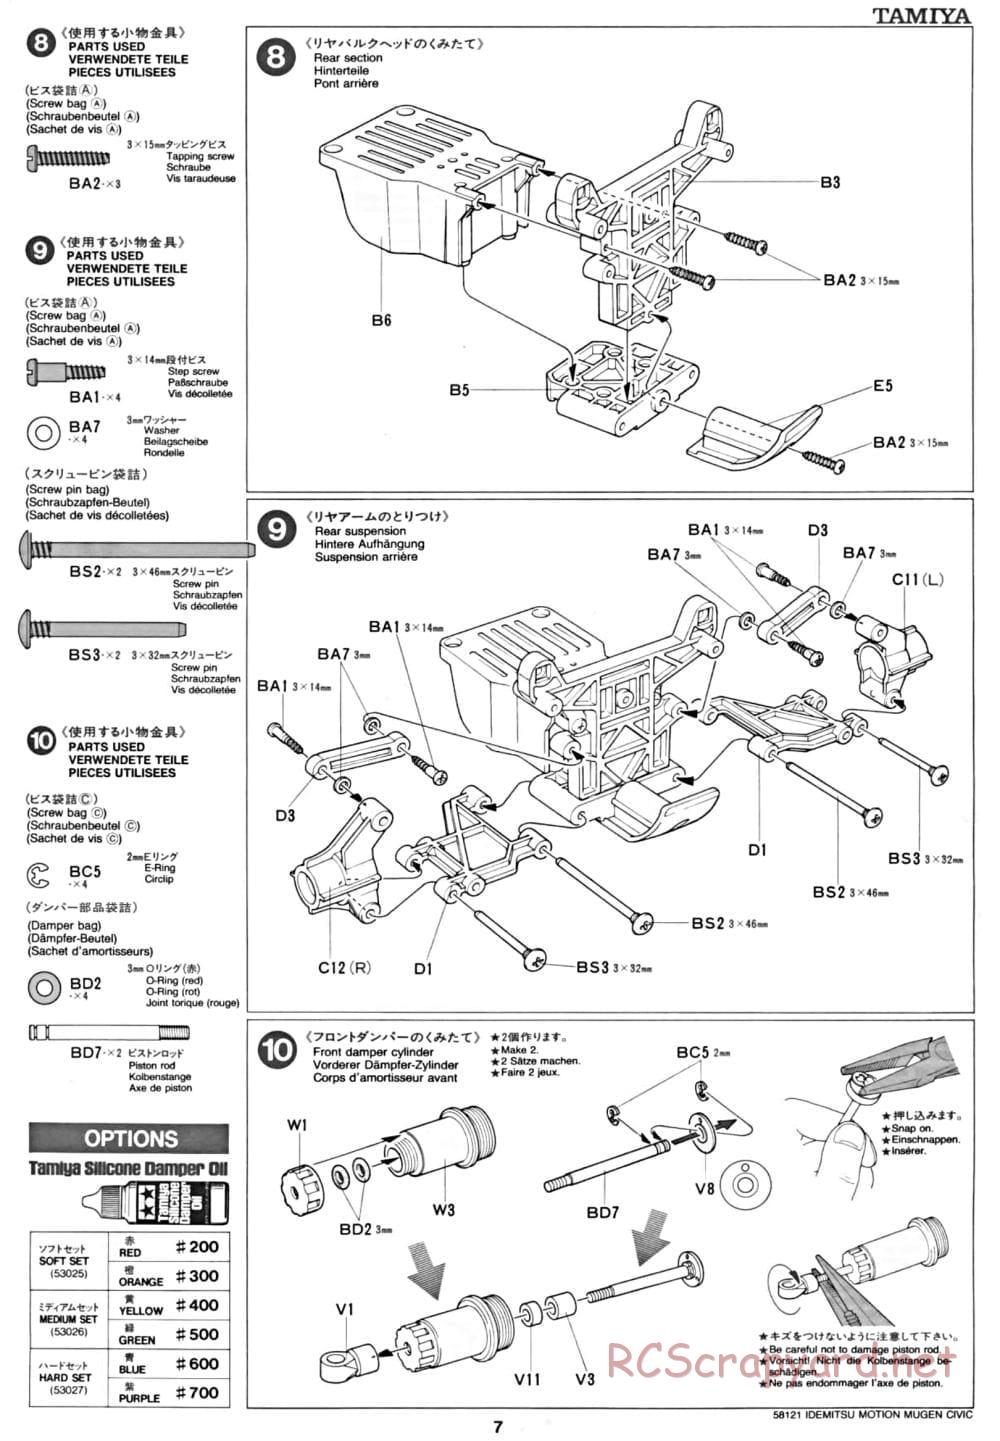 Tamiya - Idemitsu Motion Mugen Civic - FF-01 Chassis - Manual - Page 7